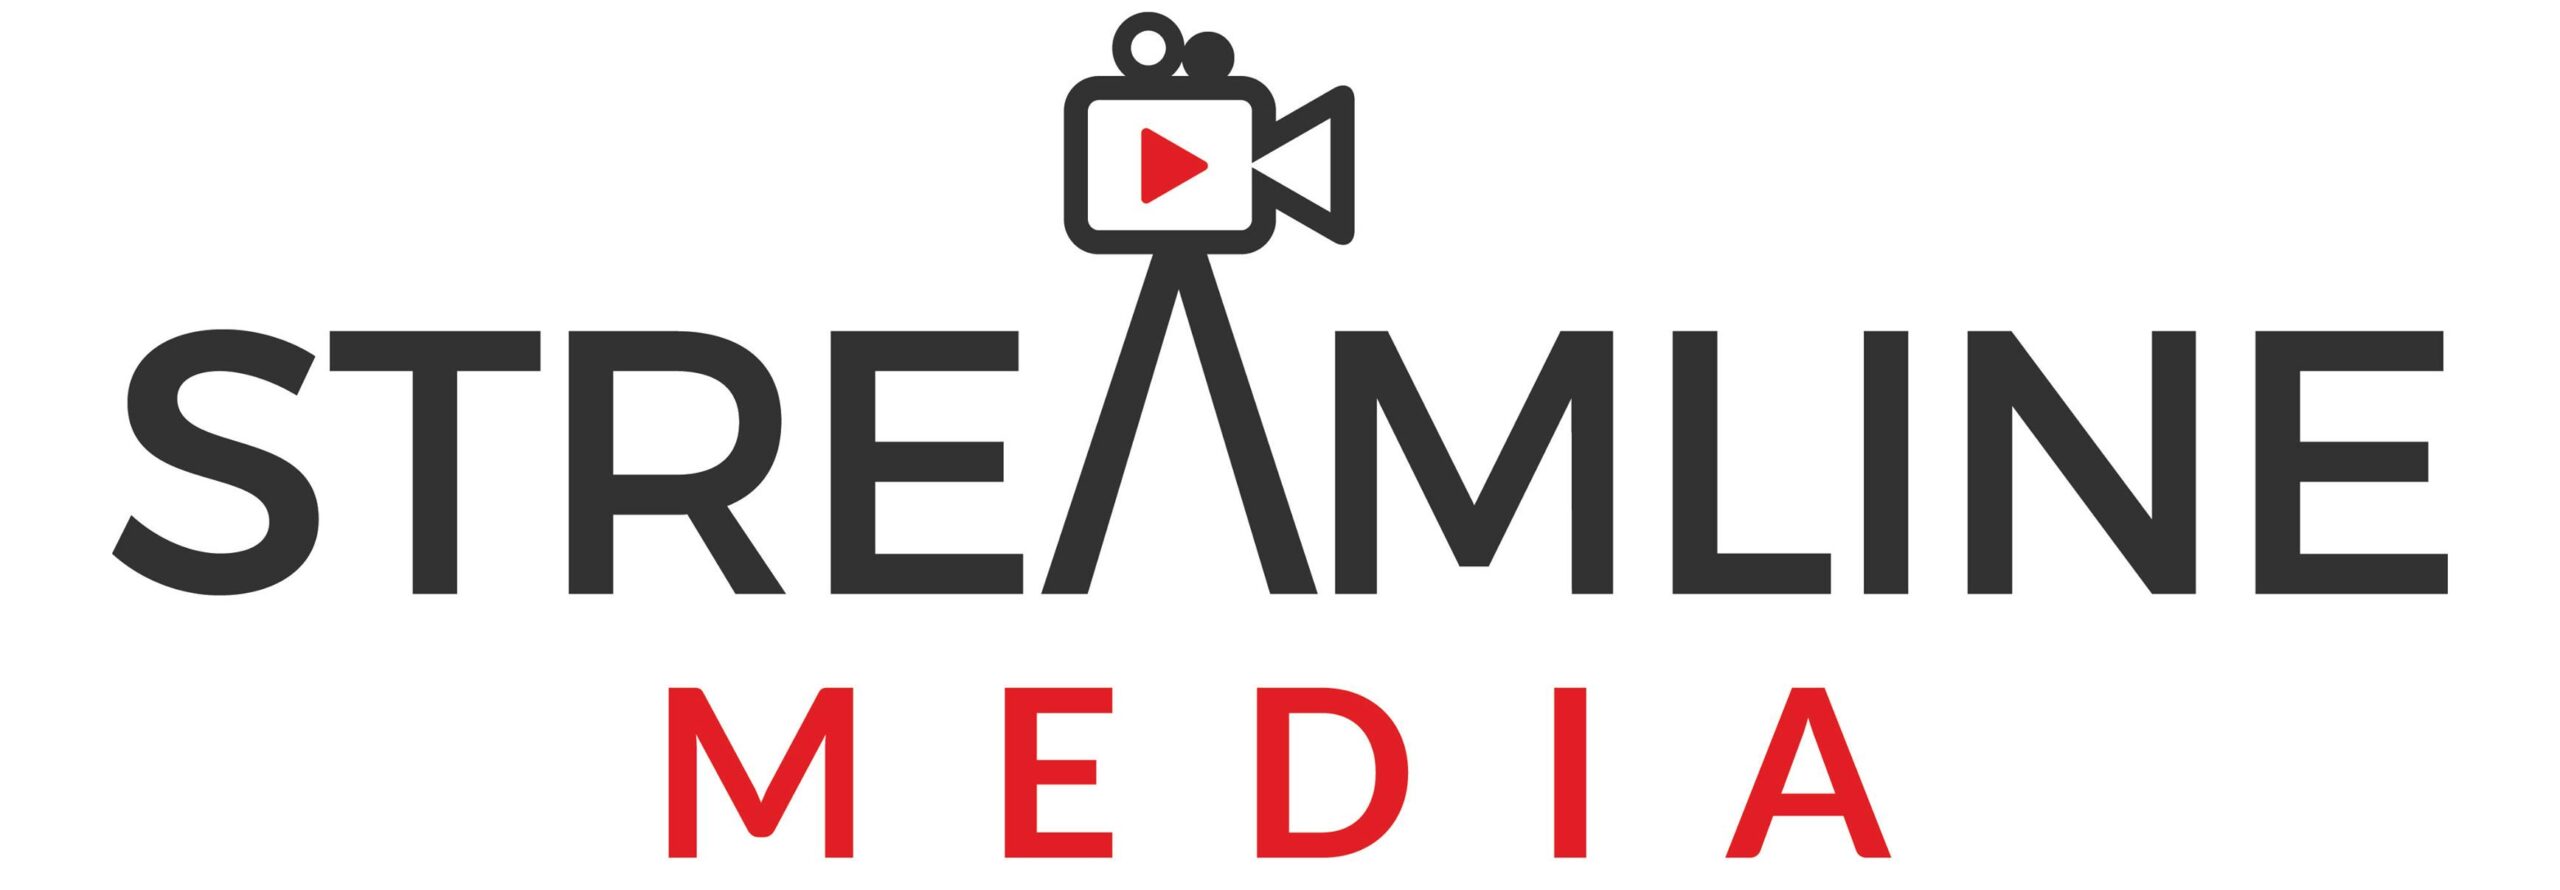 Streamline Media business logo